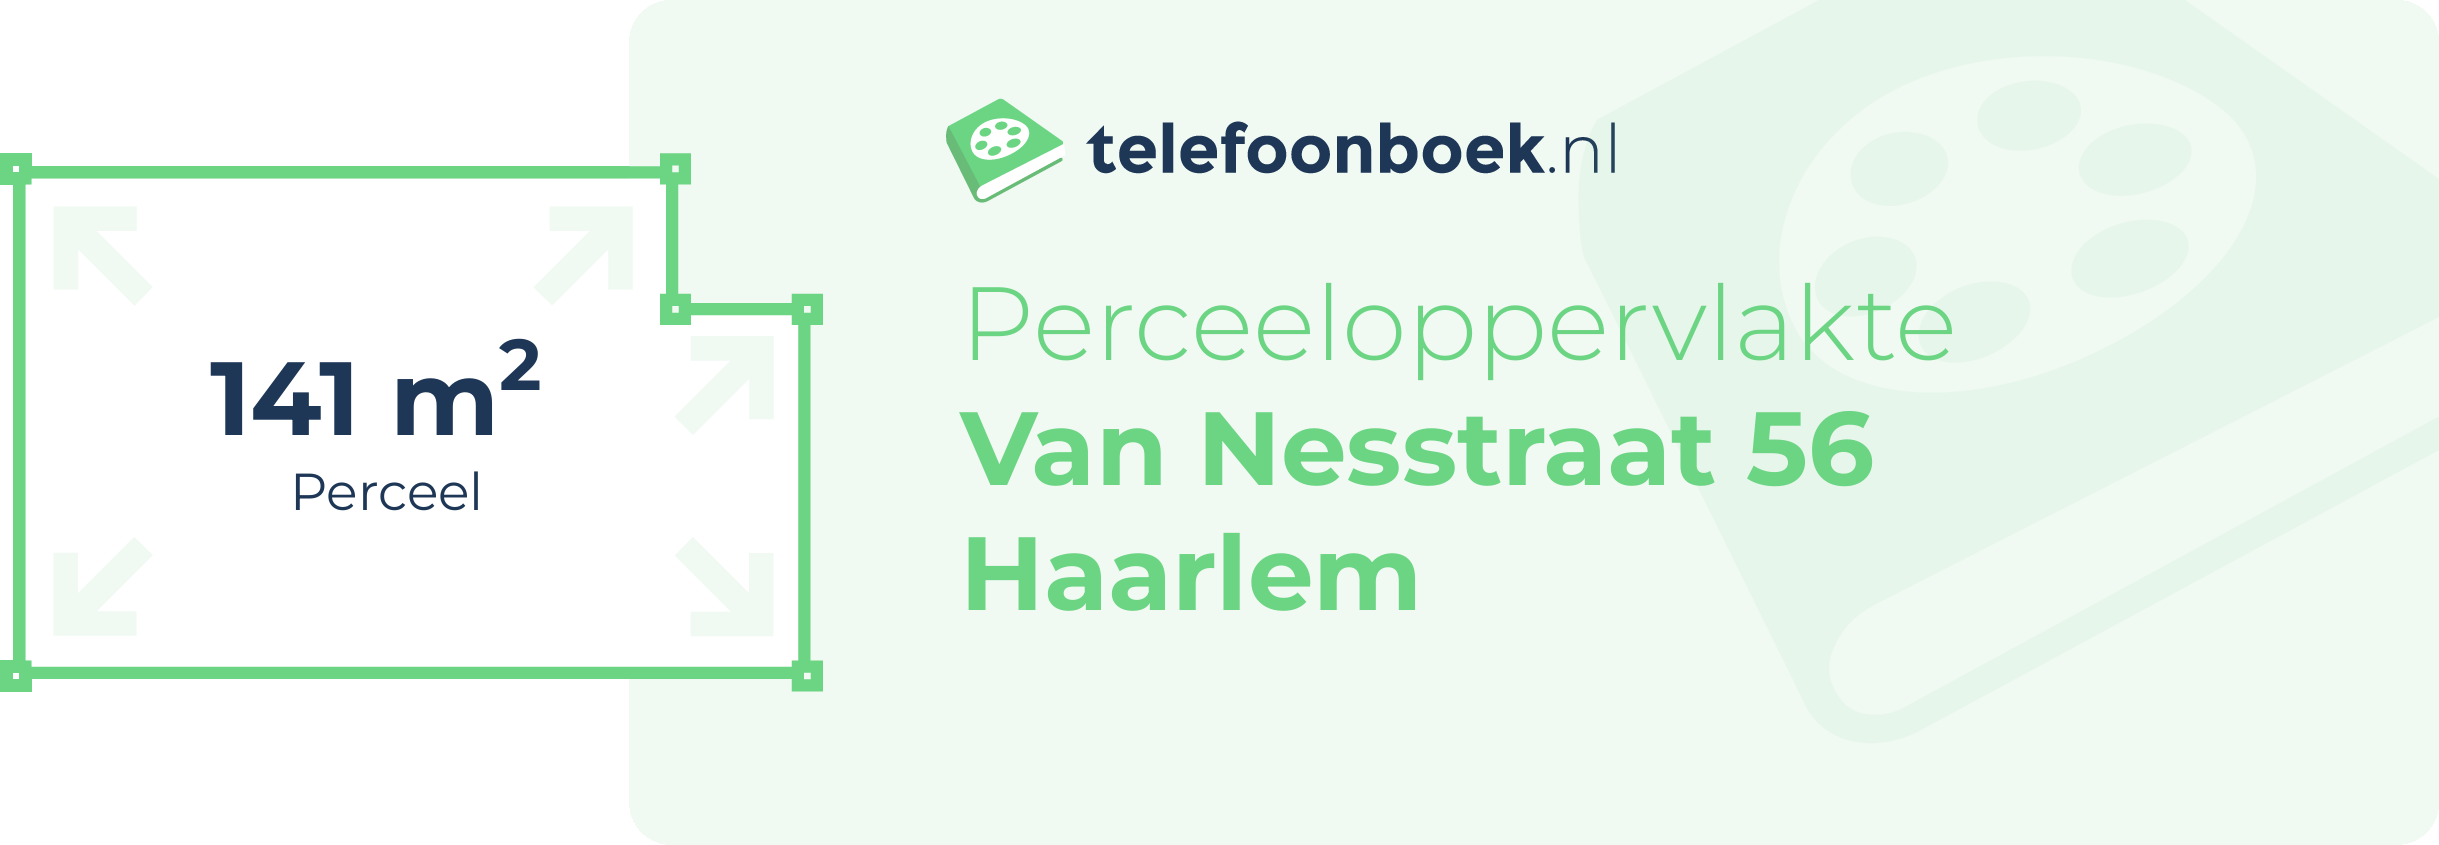 Perceeloppervlakte Van Nesstraat 56 Haarlem